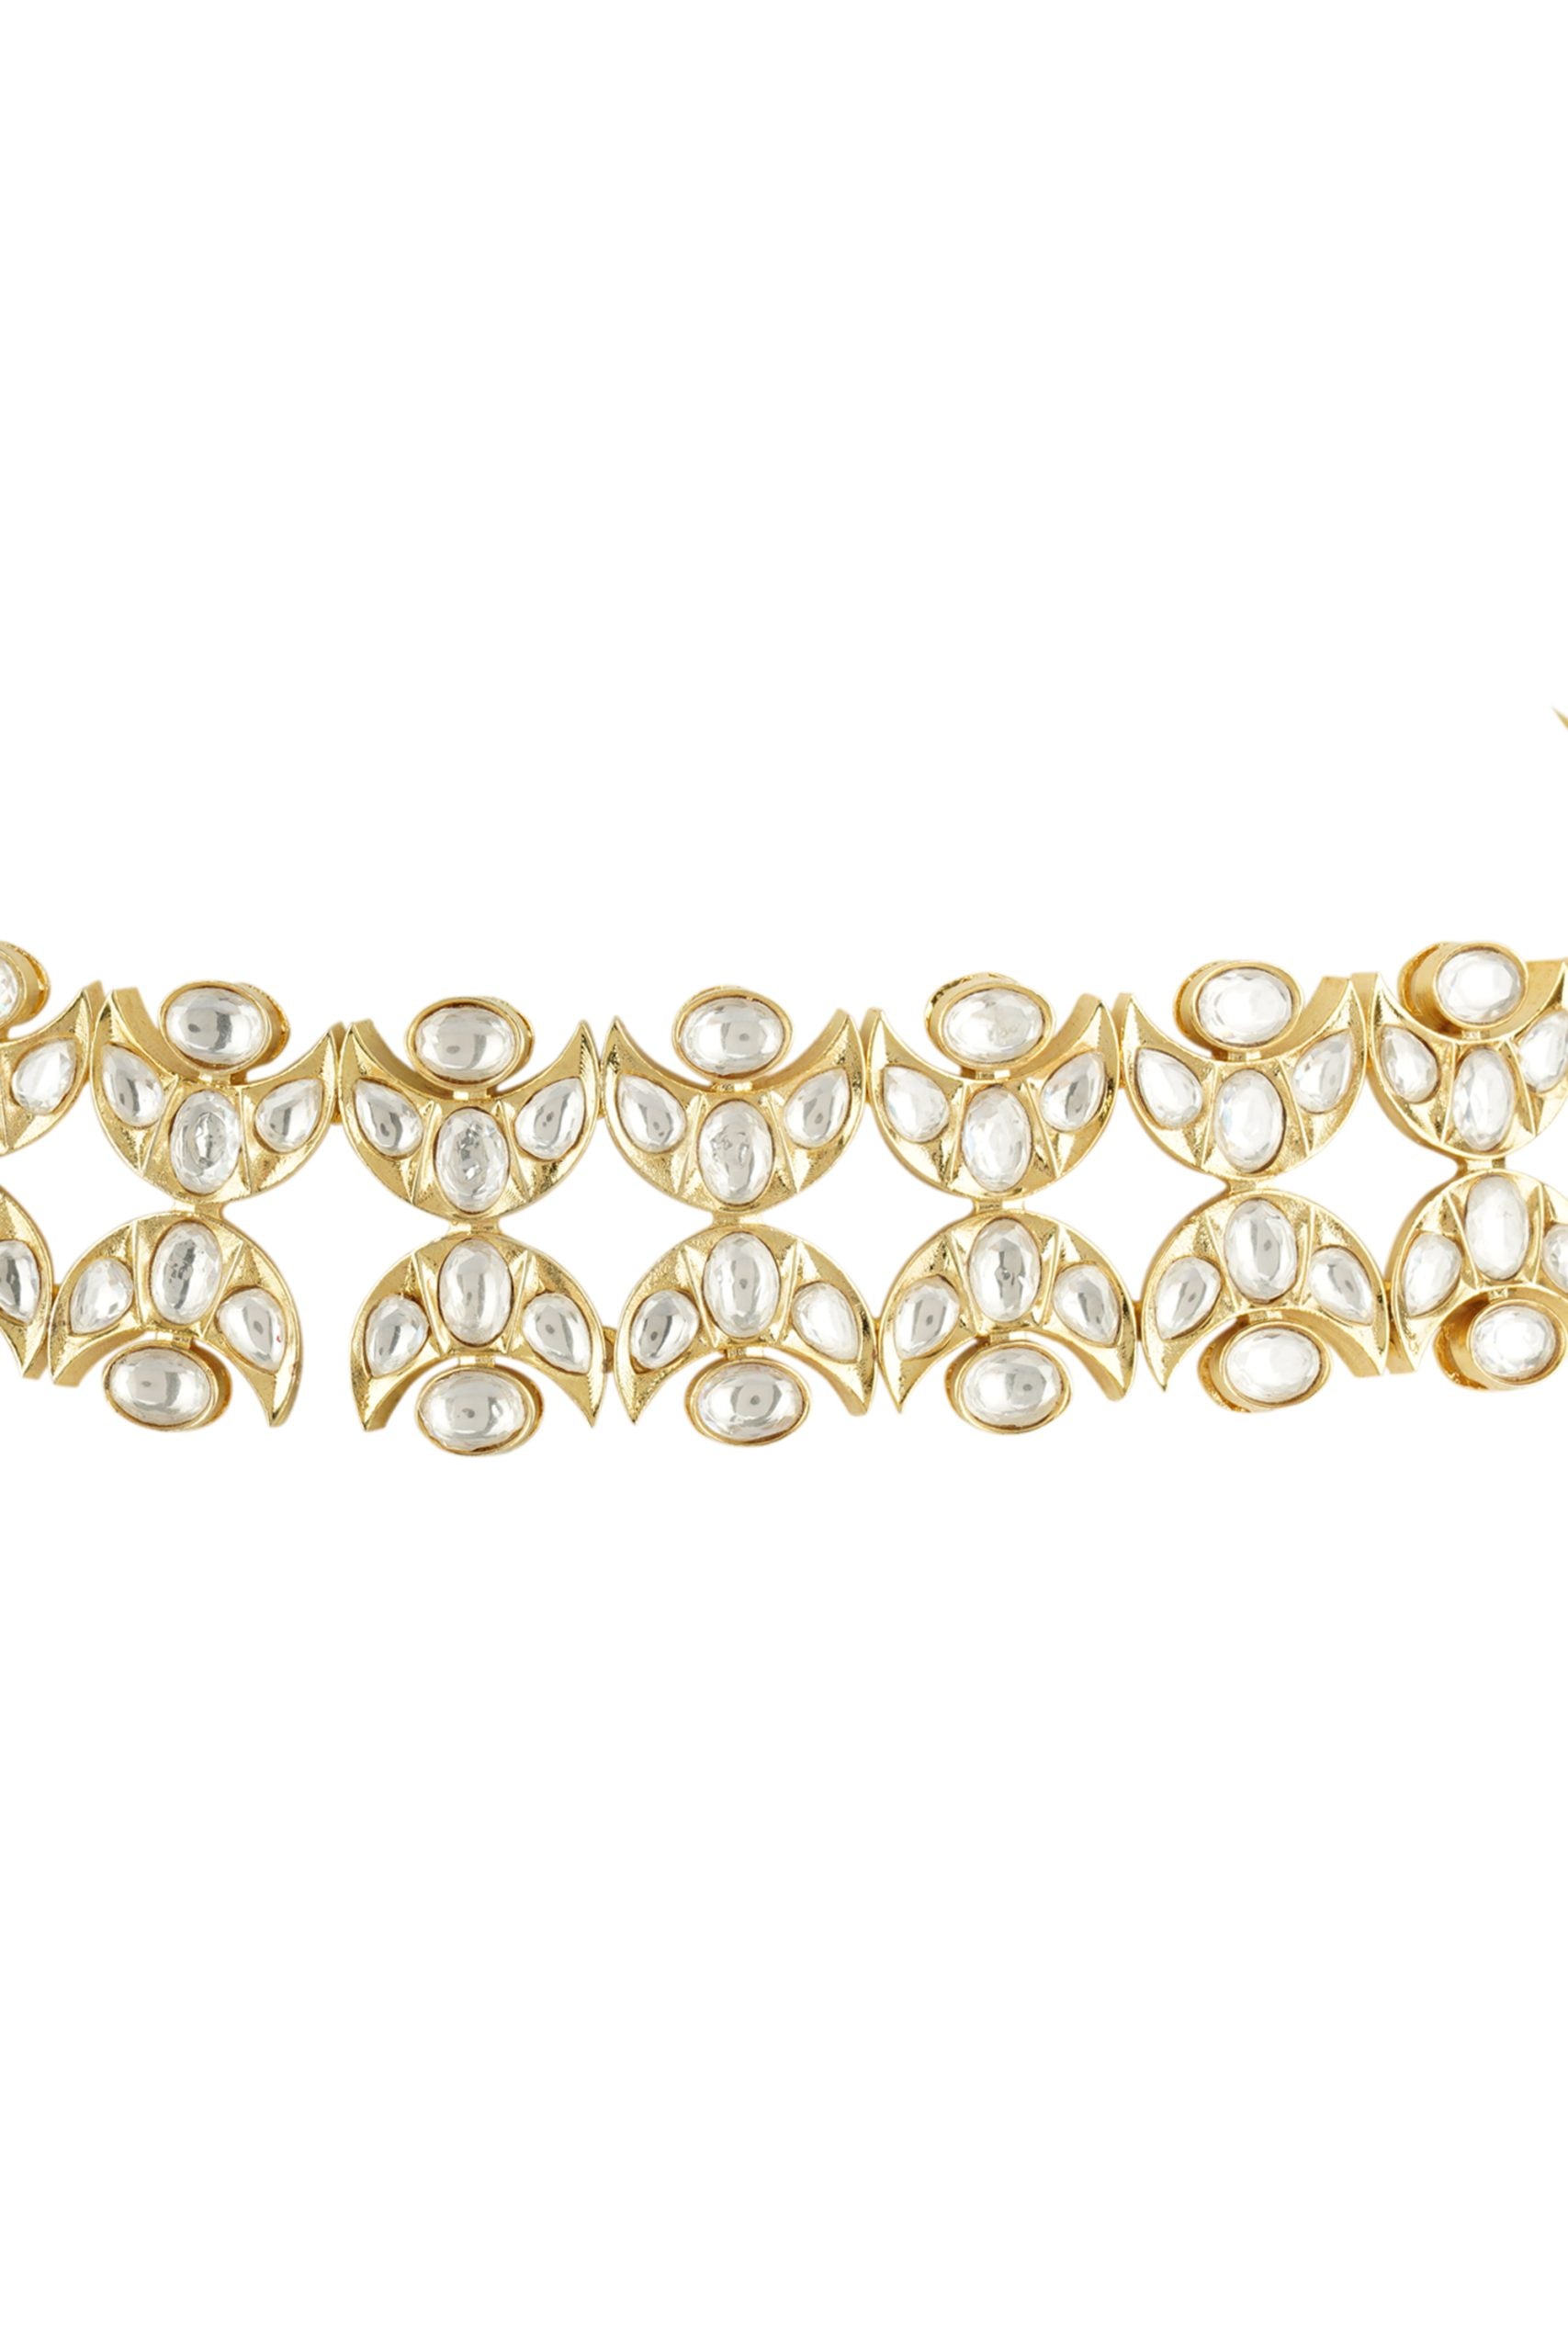 Prestigious Gold Plated Kundan Choker Necklace Set